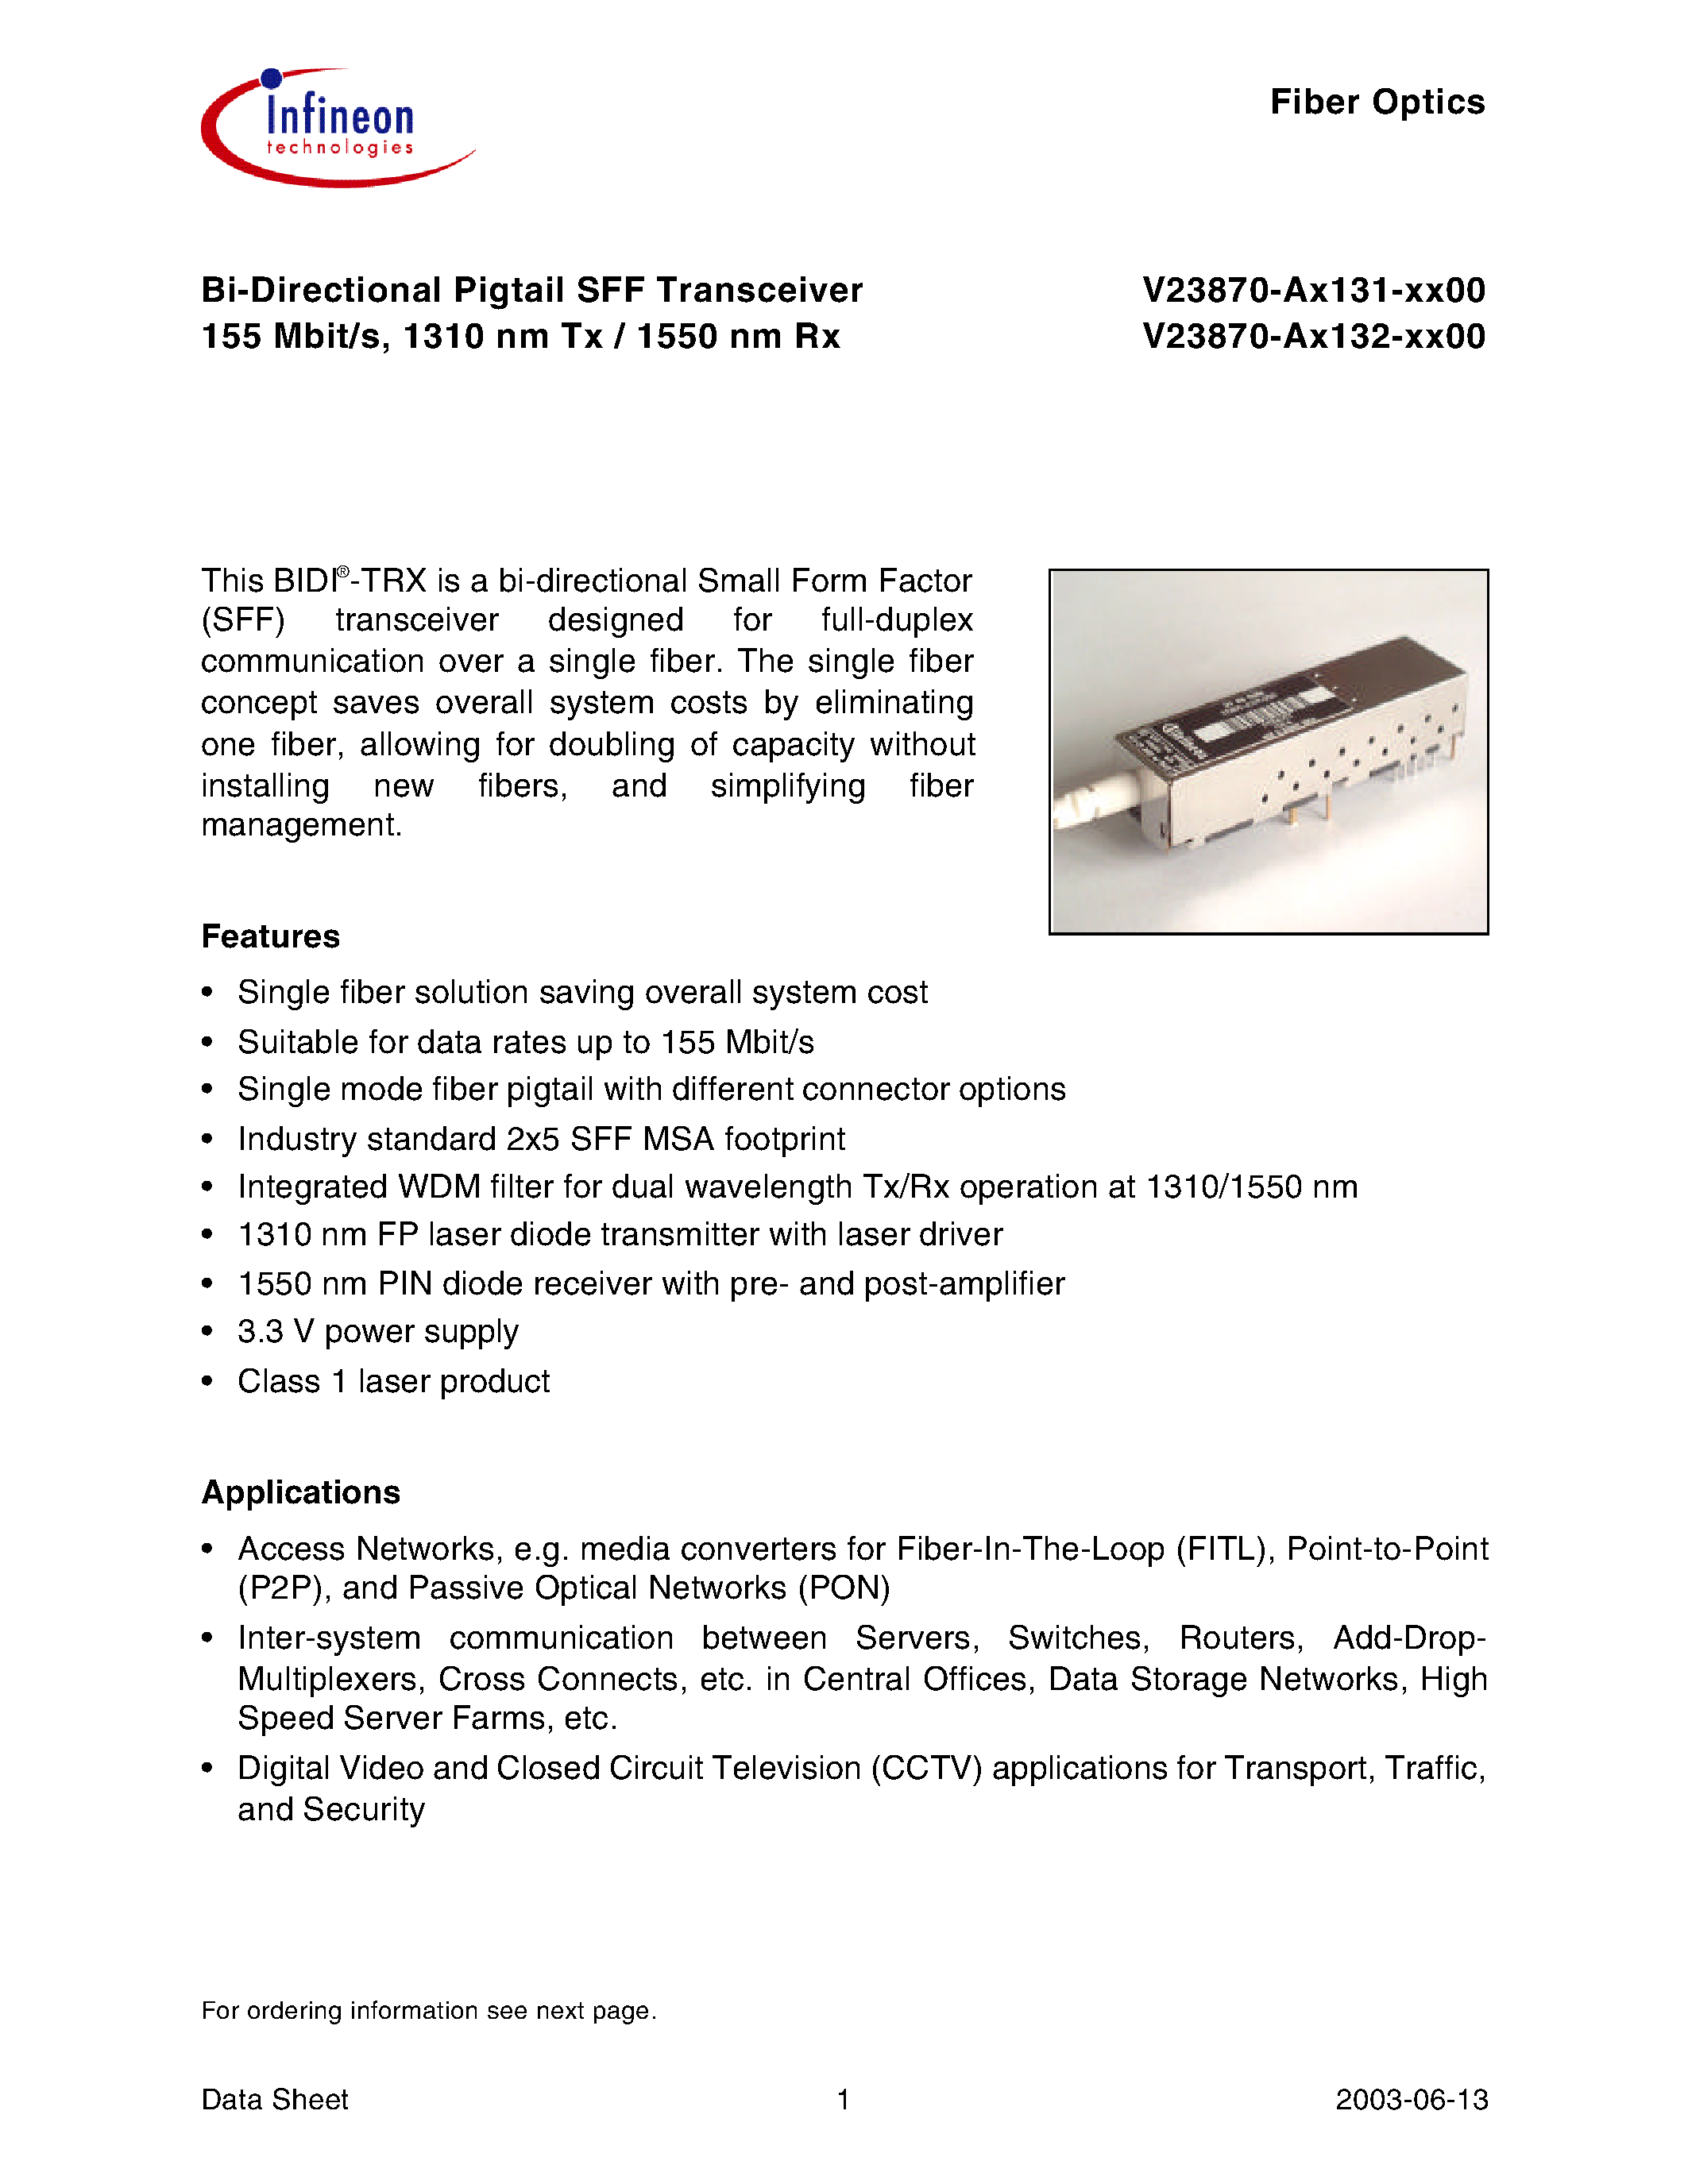 Даташит V23870-A3132-C100 - Bi-Directional Pigtail SFF Transceiver 155 Mbit/s/ 1310 nm Tx / 1550 nm Rx страница 1